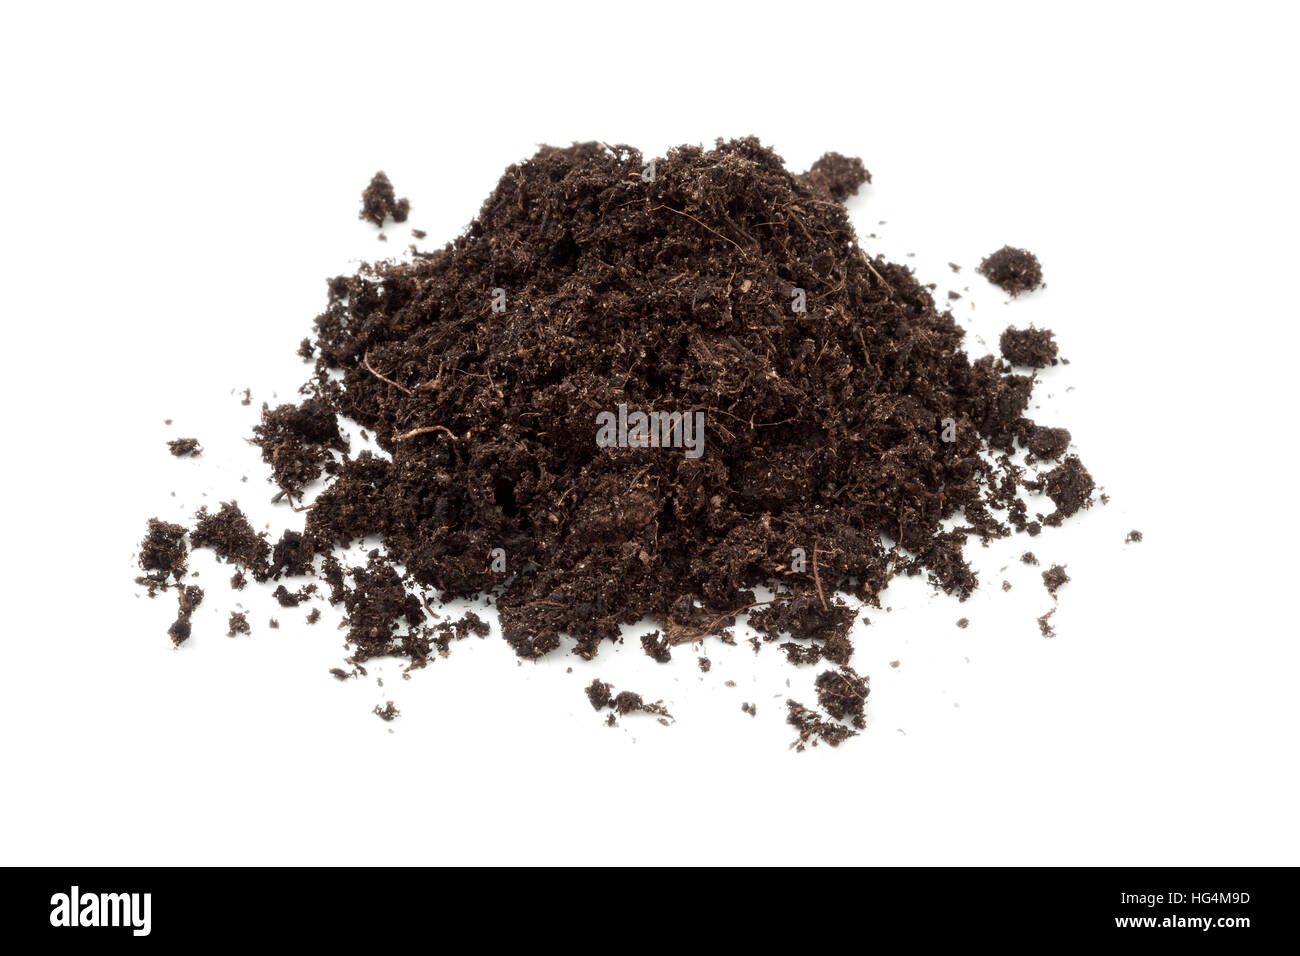 Heap of black soil on white background Stock Photo